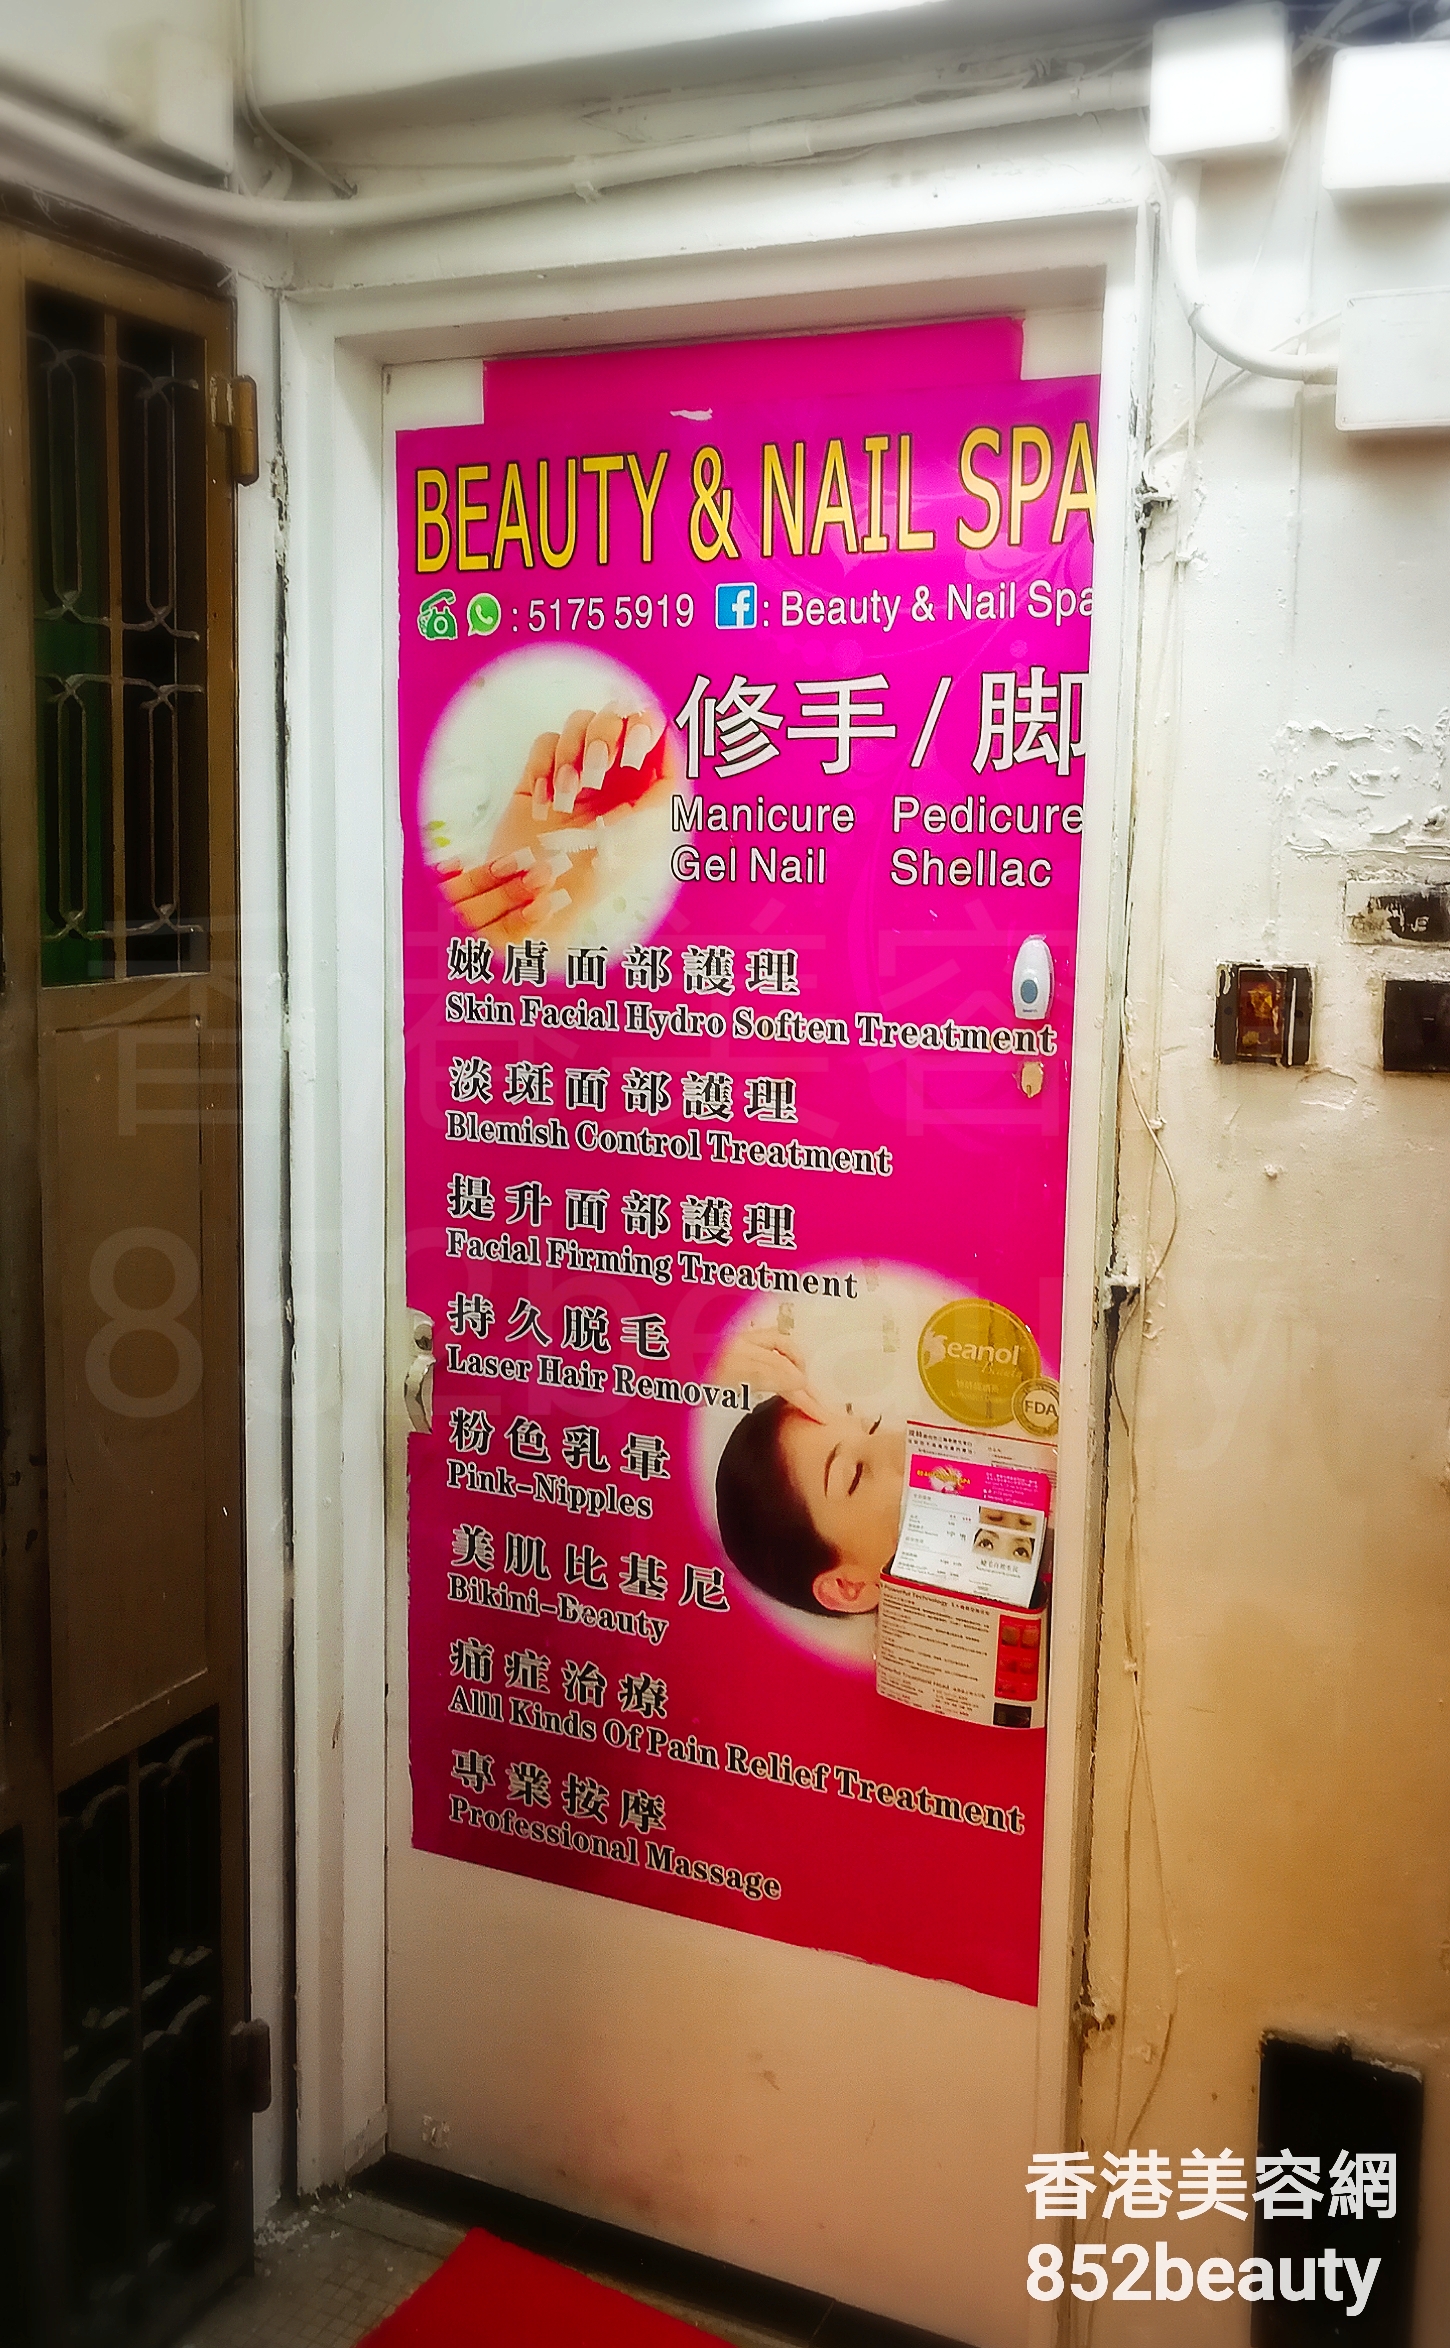 香港美容網 Hong Kong Beauty Salon 美容院 / 美容師: Beauty & Nail Spa